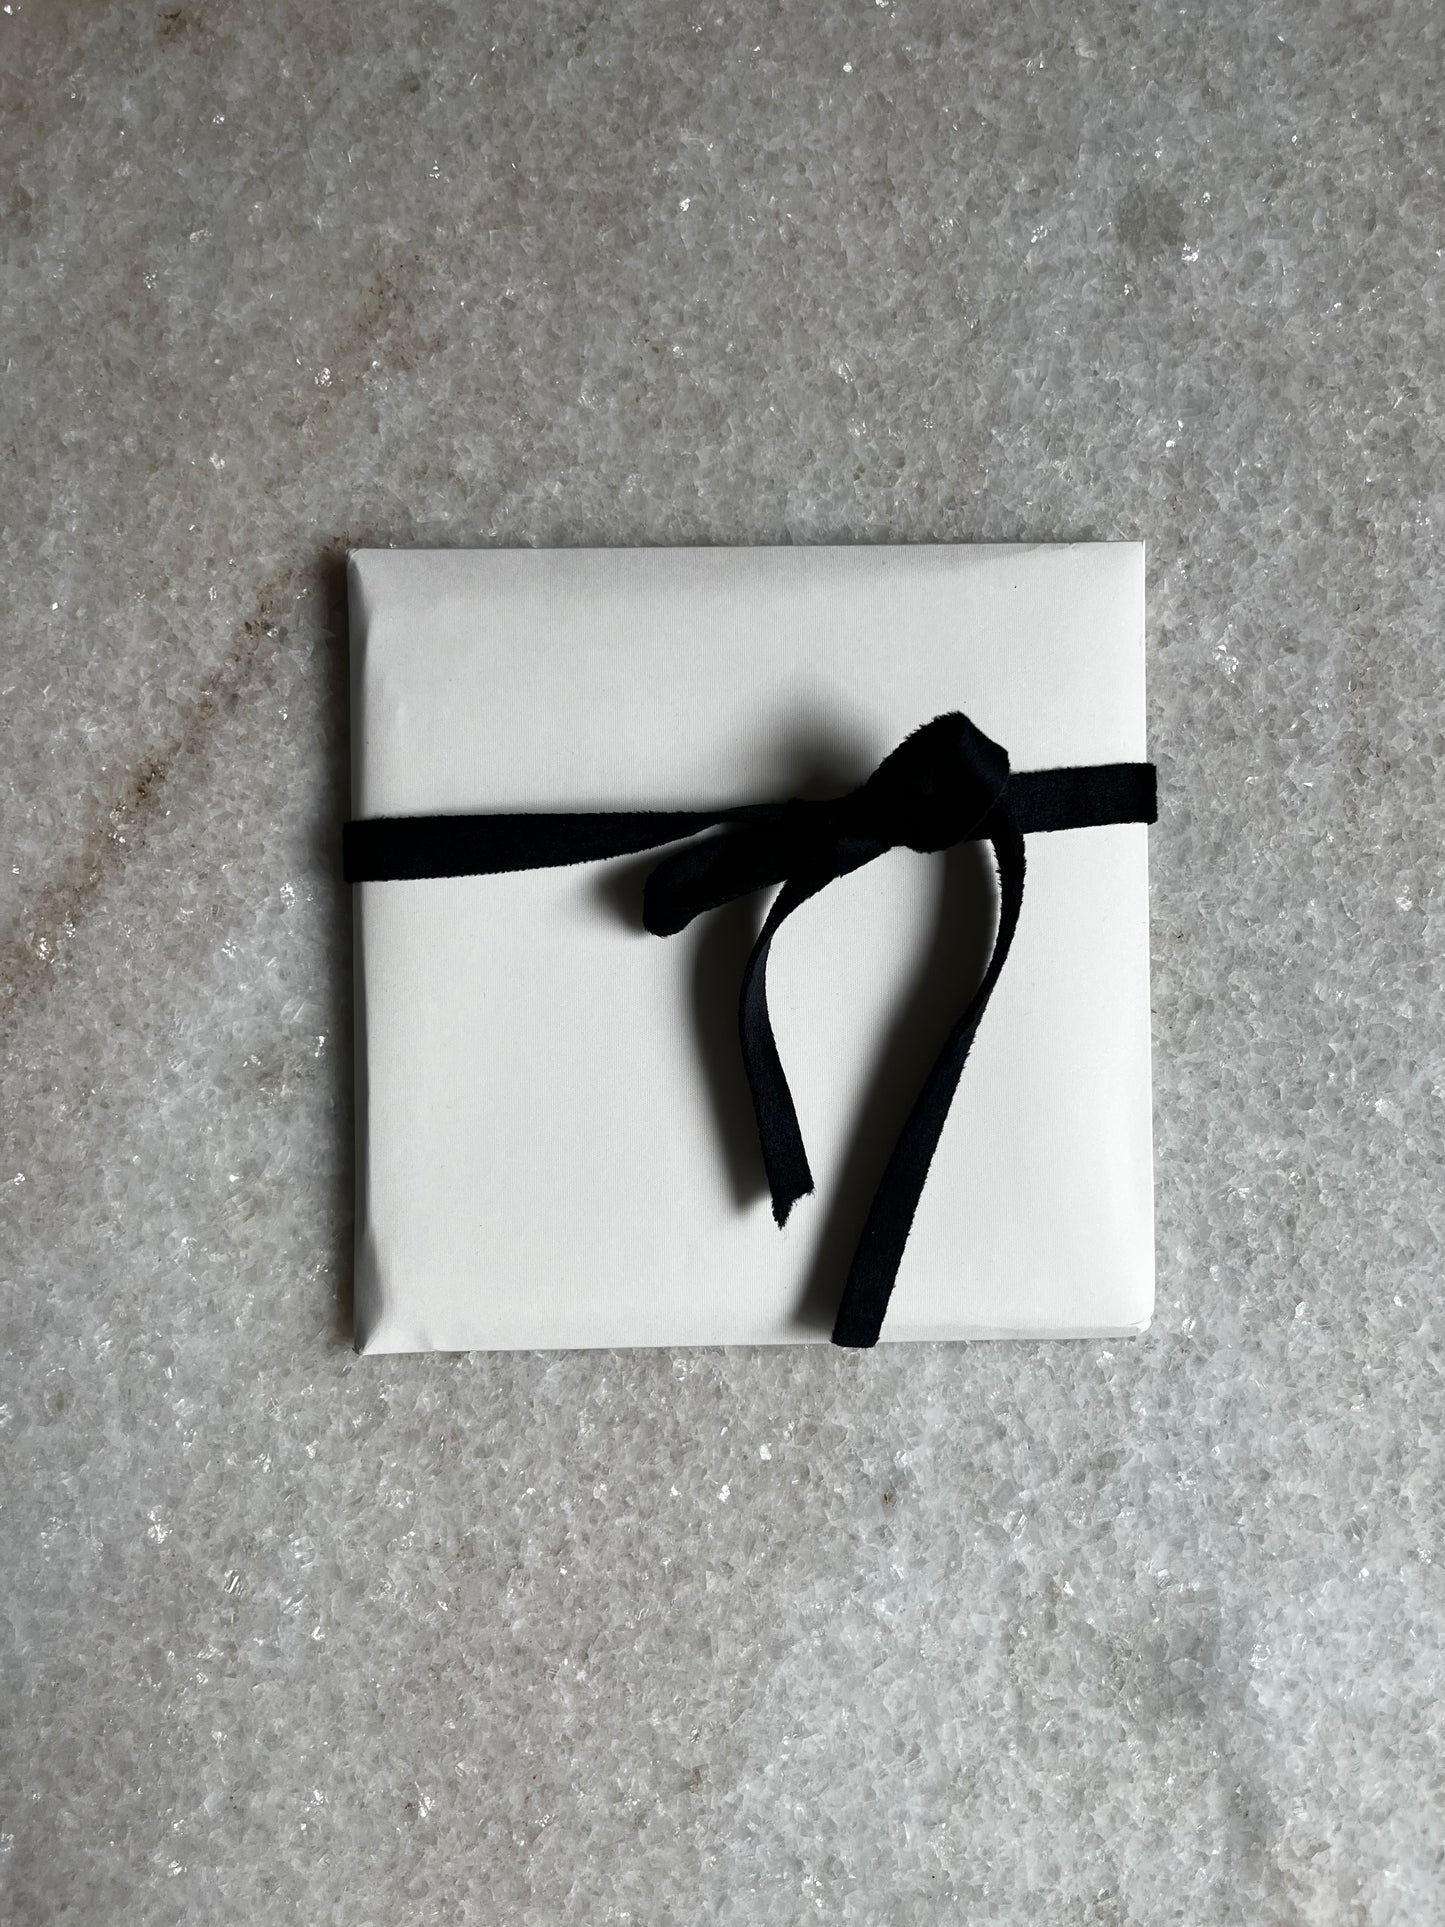 MINI Modern Gift Card Holder - Ivory White 'Thank you'